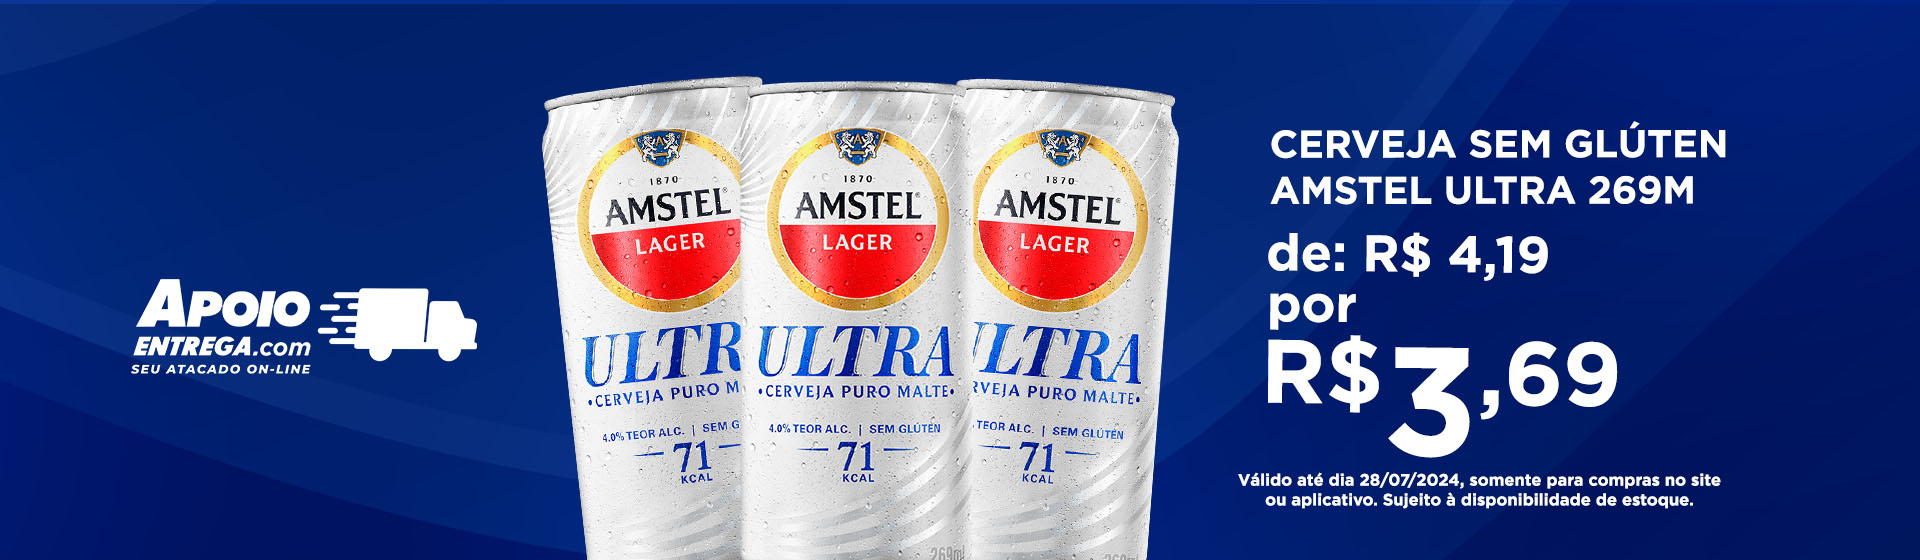 Amstel Ultra até 28/07